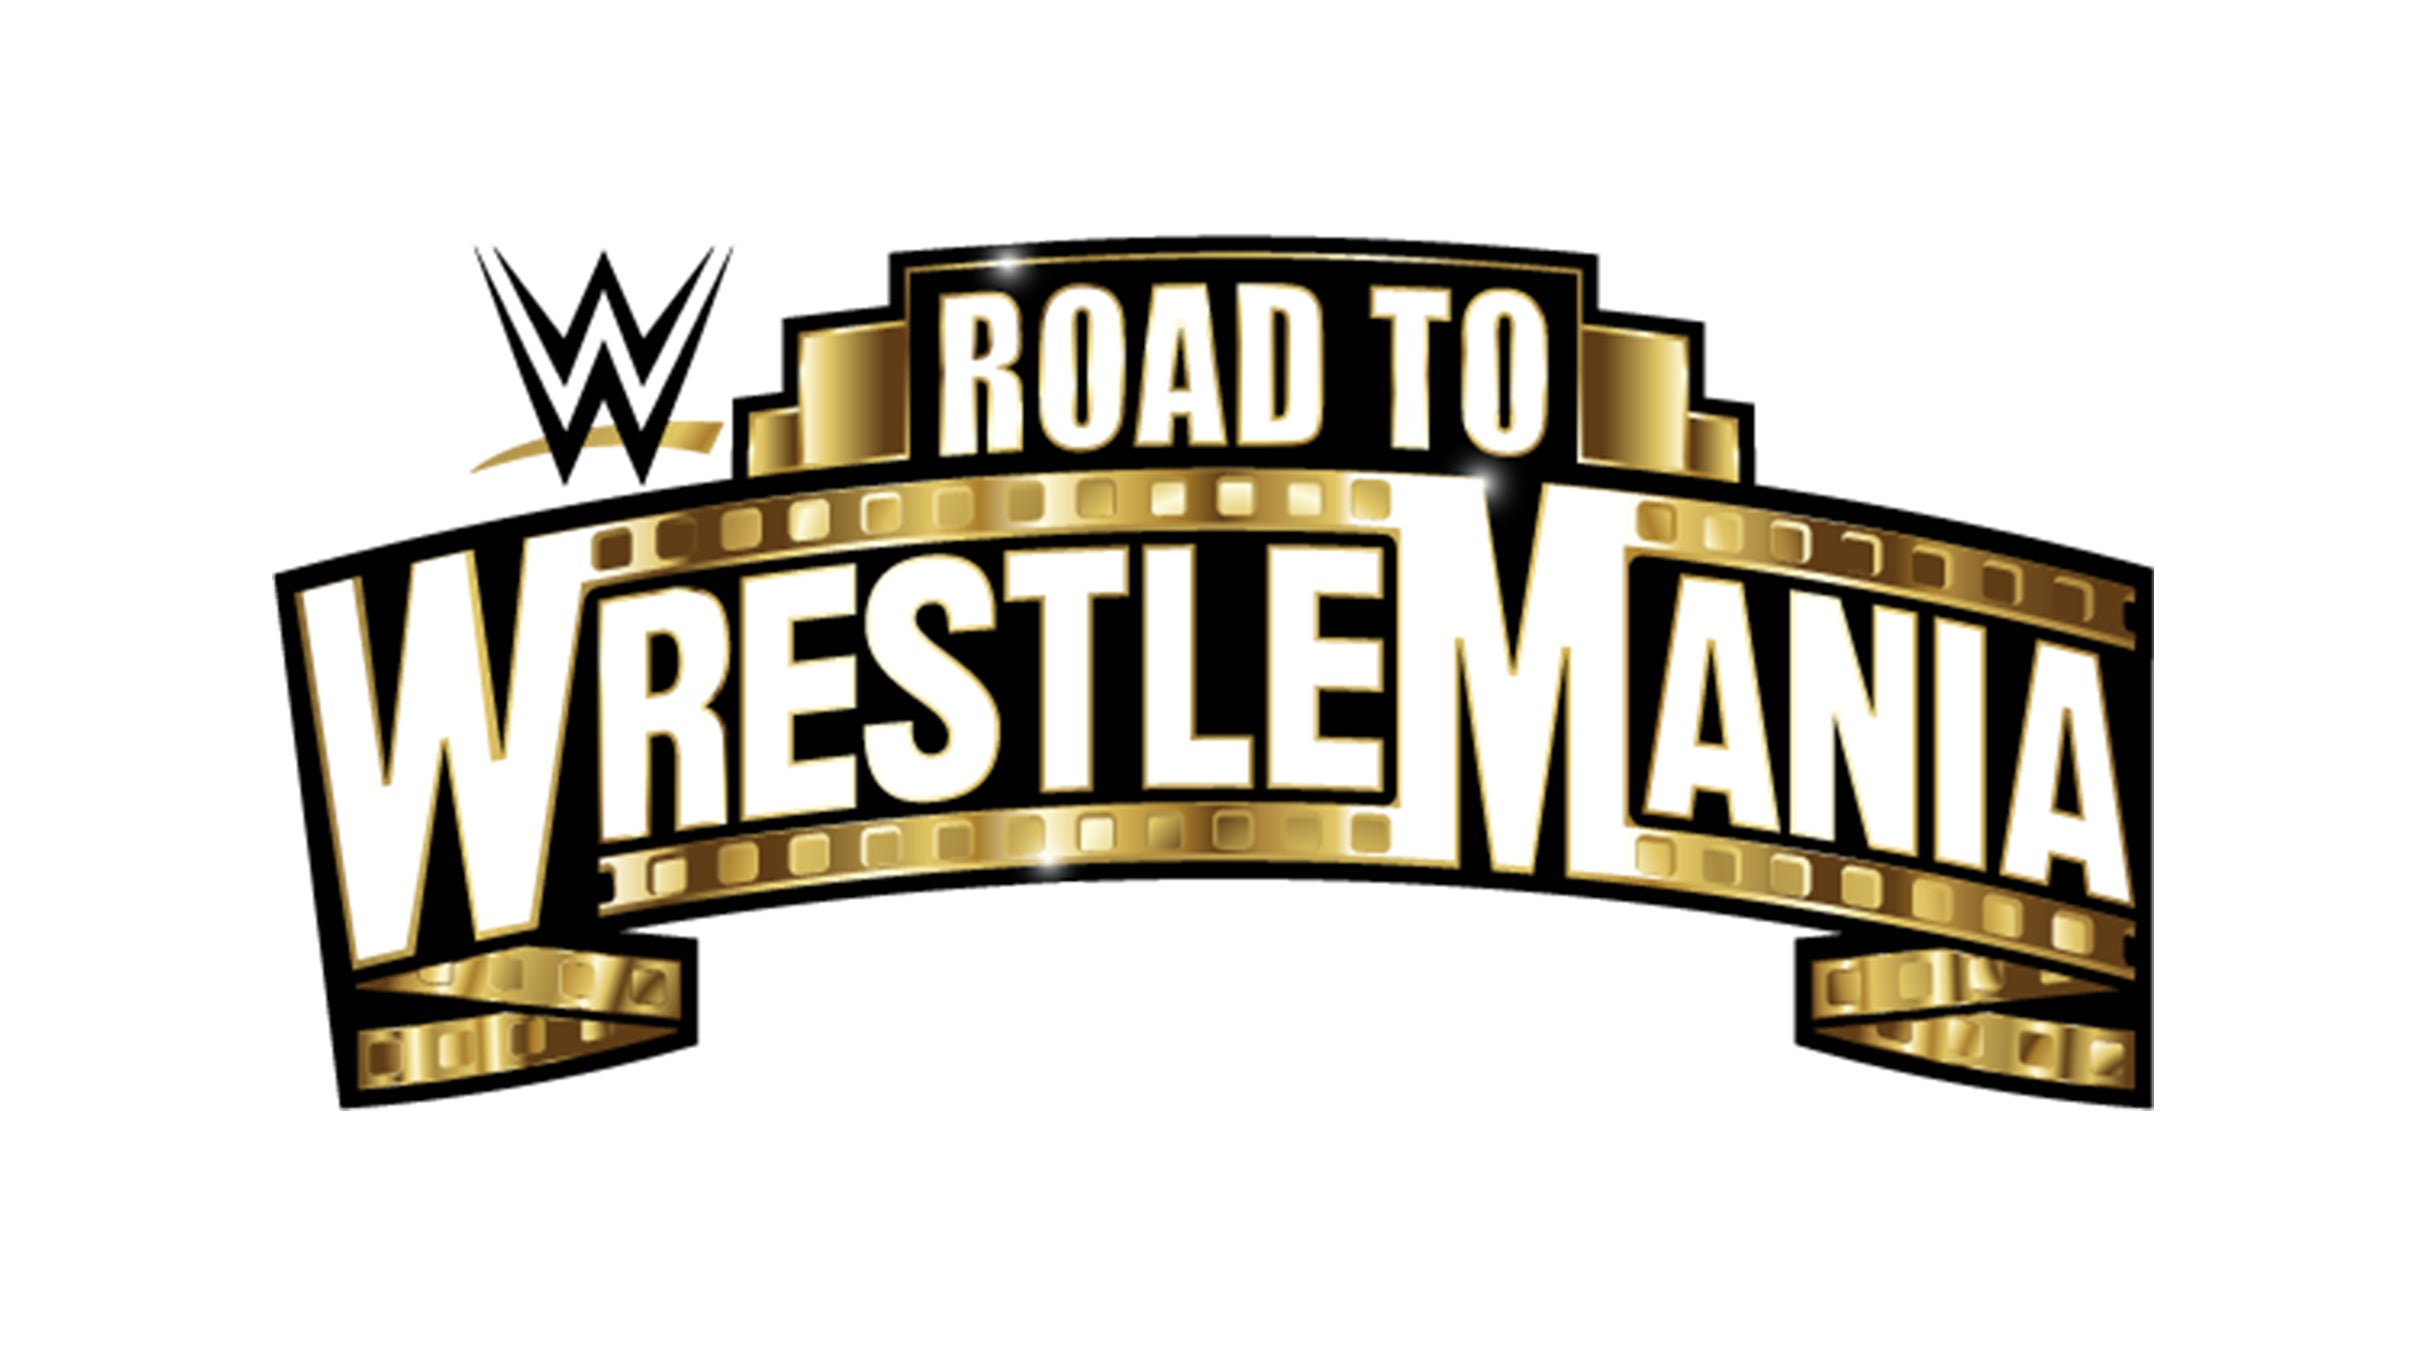 WWE Road to WrestleMania free presale info for wwe wrestling event tickets in Fargo, ND (Fargodome)